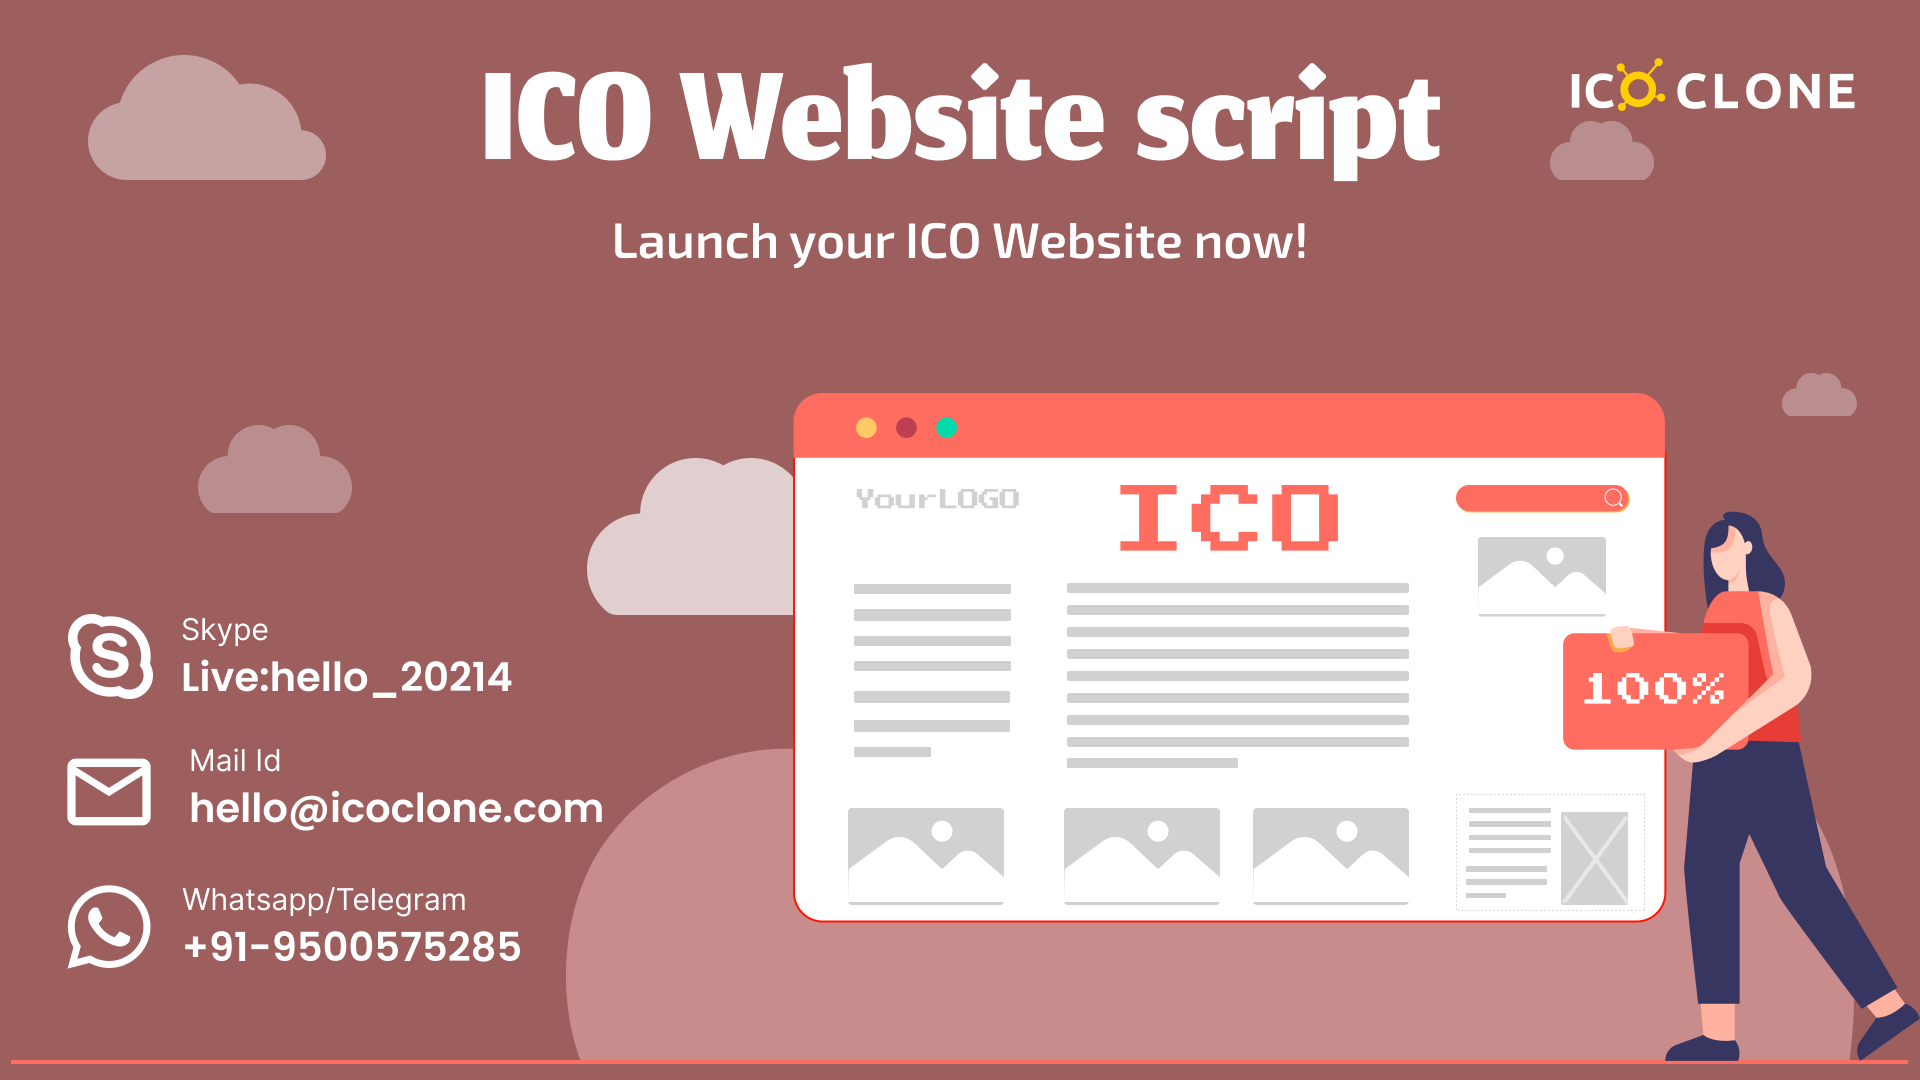 Ico website script - forum.png